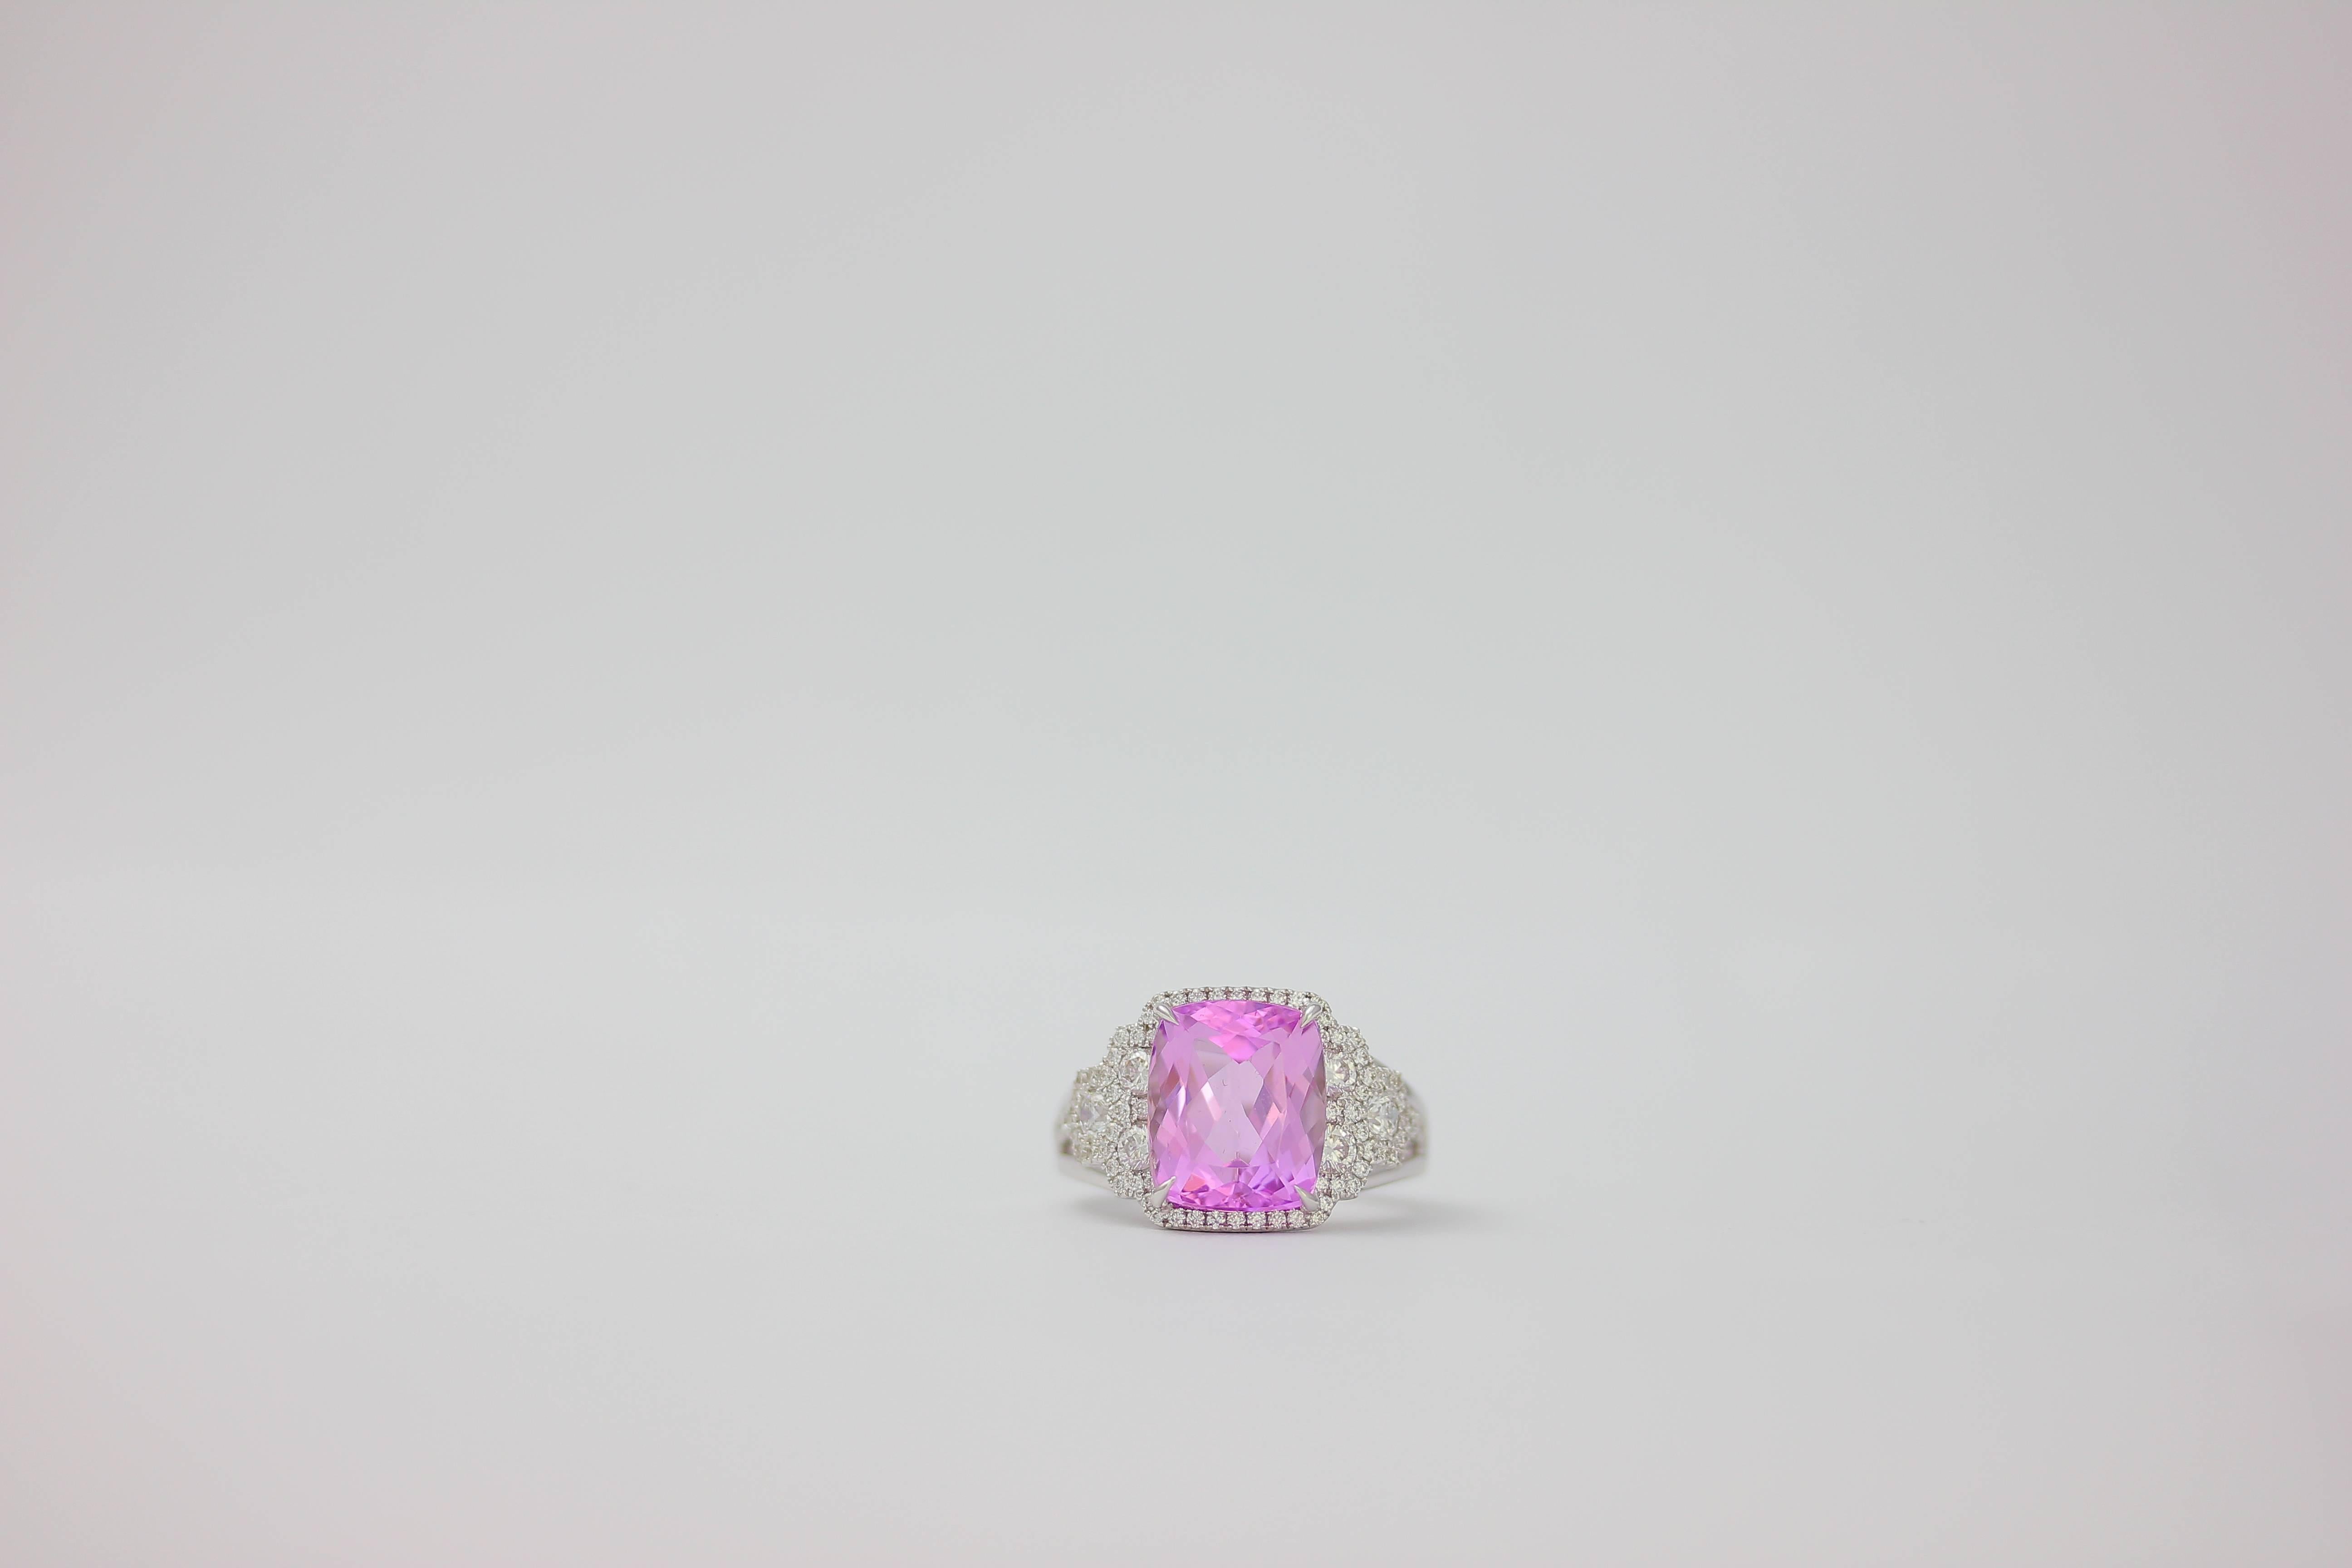 One of Kind Kunzite Diamond Ring set in 18k White gold with beautiful white diamonds. 
Kunizite: 6.43 Carats
Diamond Count 80
Diamond Weight: 0.85 Carat
